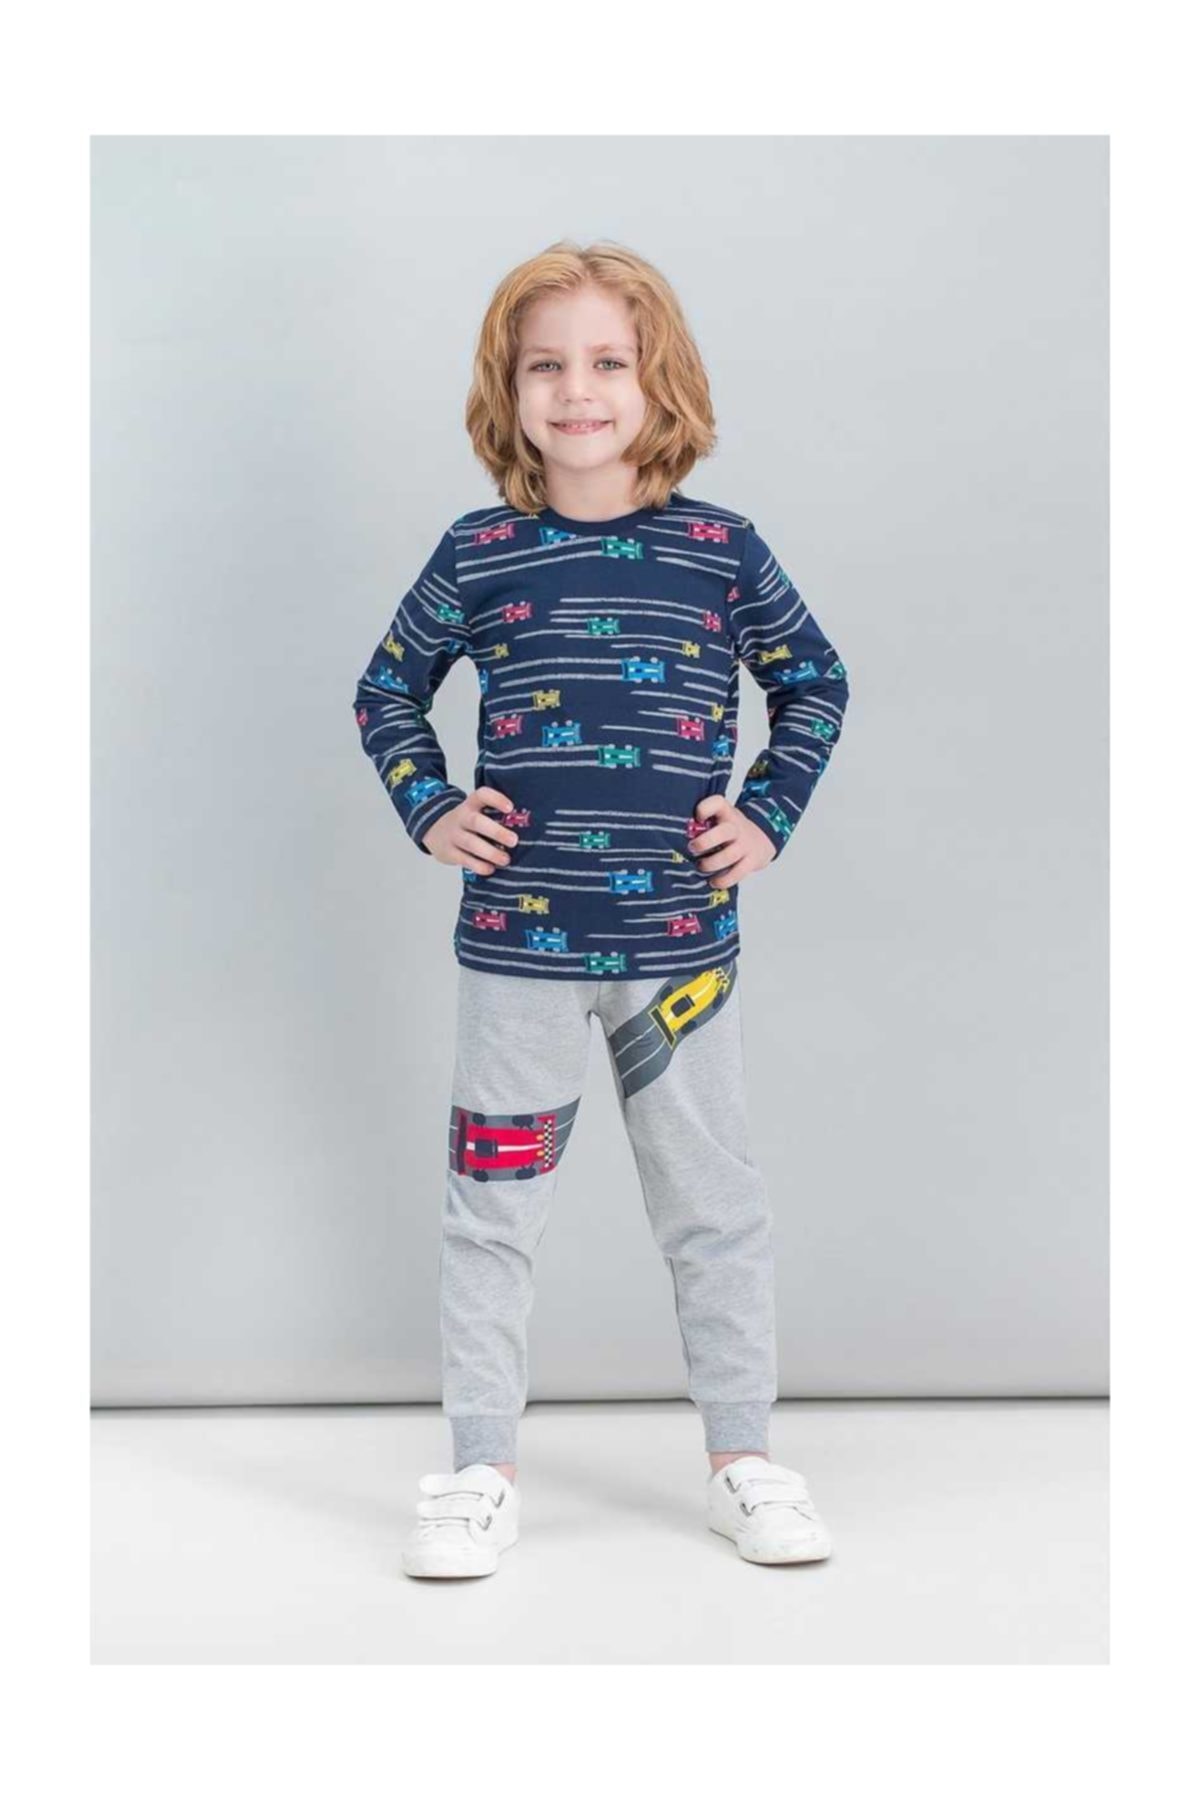 RolyPoly V1-Lacivert/V2-Saks Erkek Çocuk Pijama Takımı RP1544